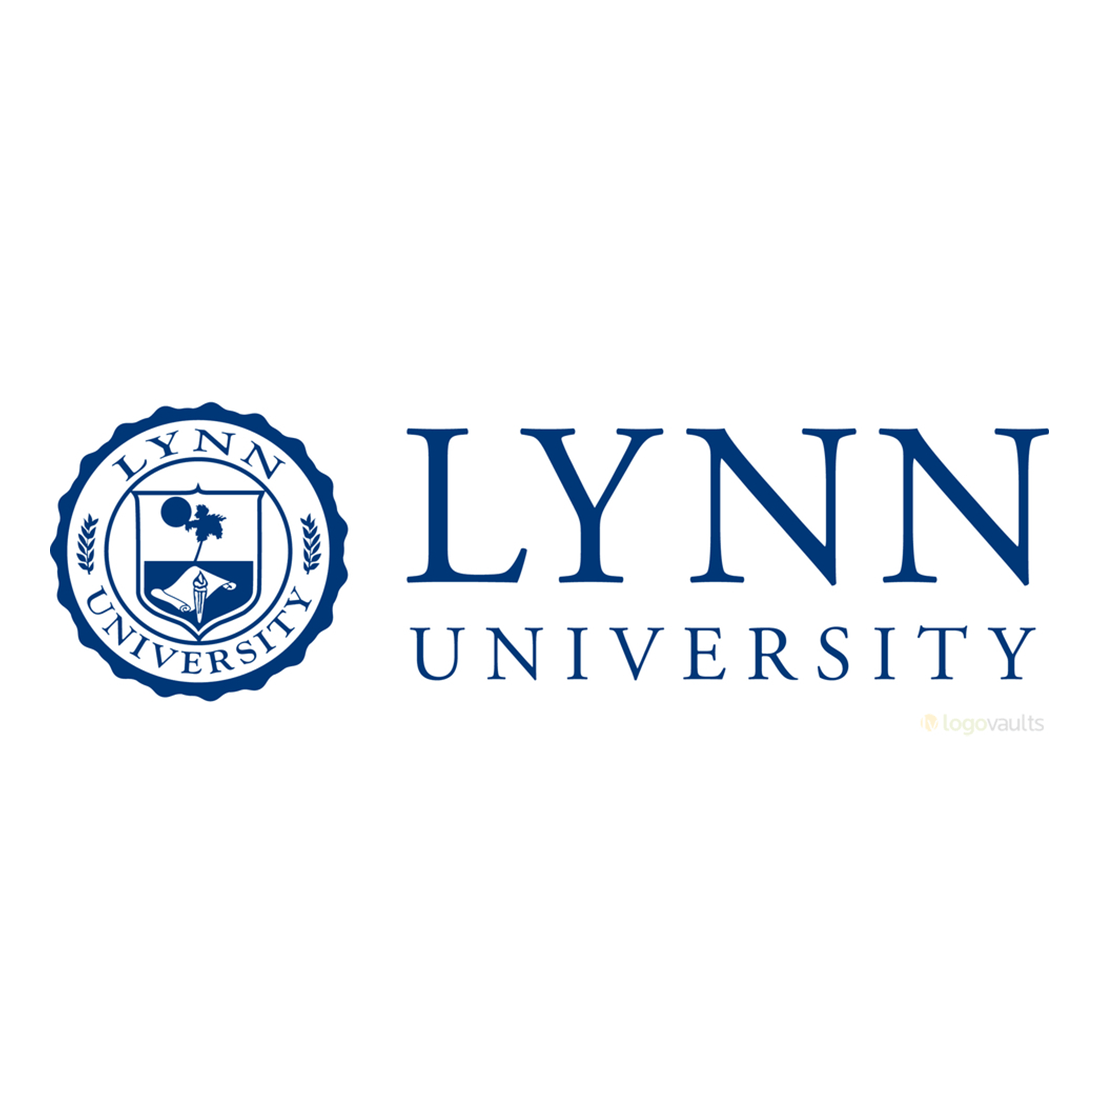 Lynn-university-logo